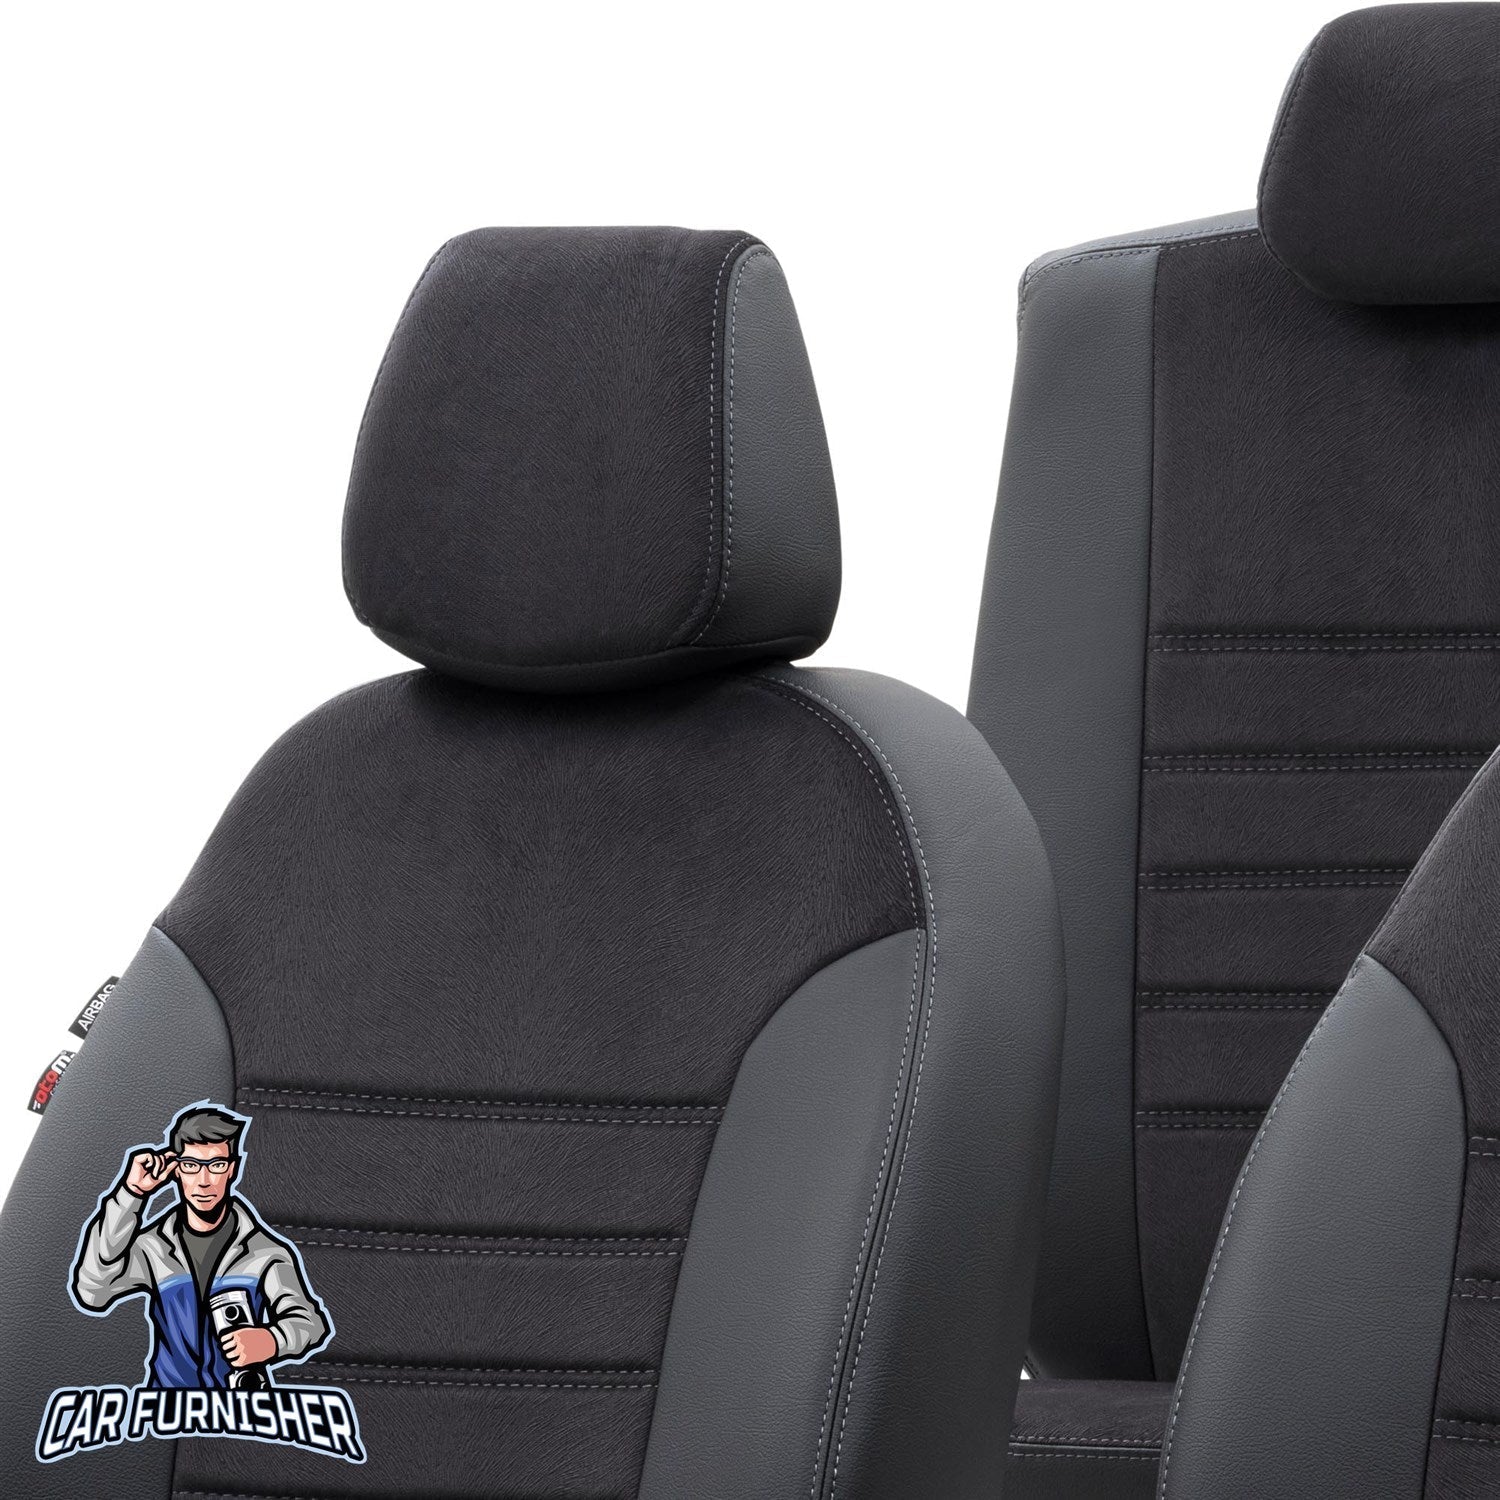 Chery Tiggo Car Seat Covers 2008-2011 London Design Black Full Set (5 Seats + Handrest) Leather & Fabric